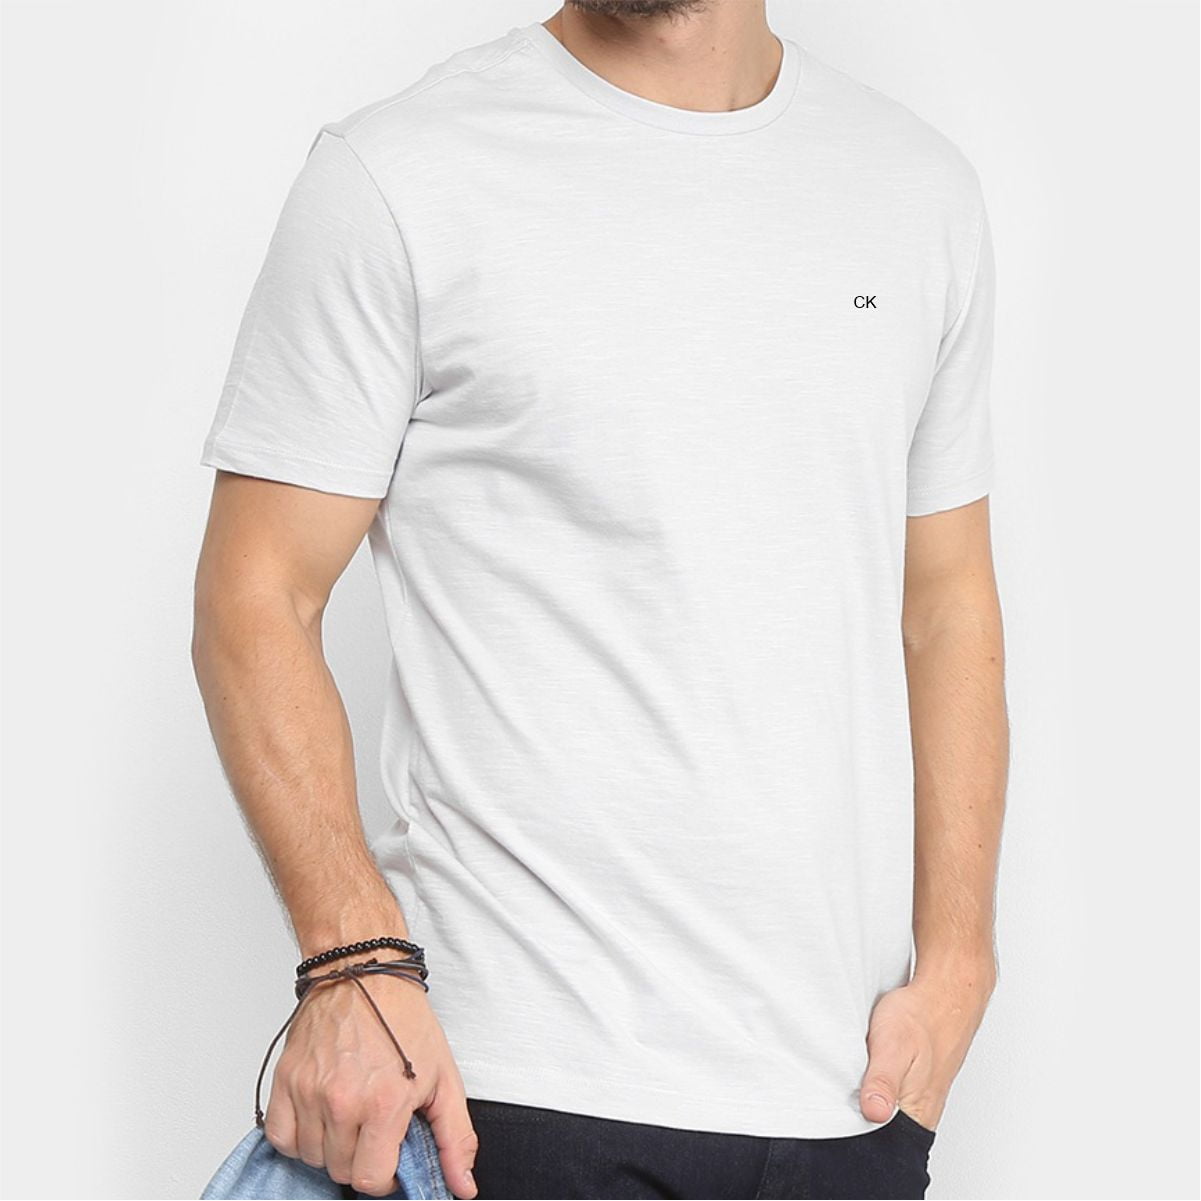 Camiseta básica branca logo